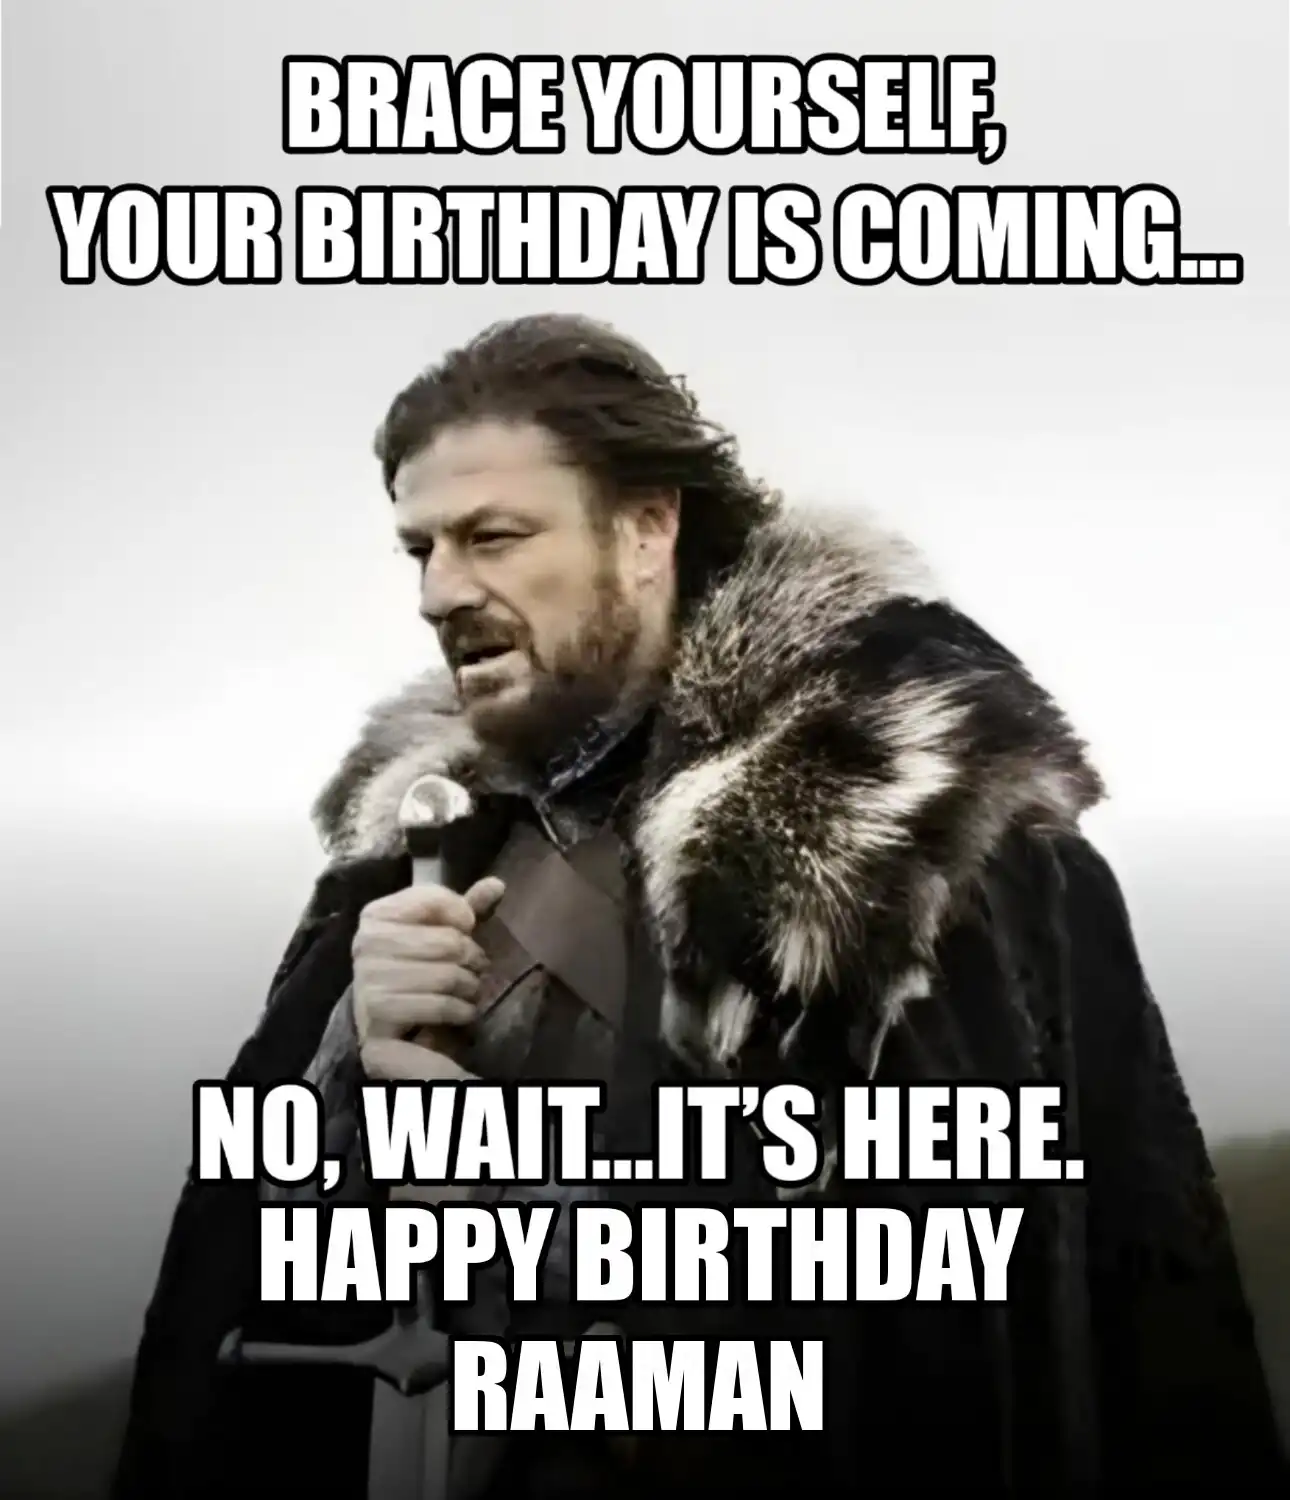 Happy Birthday Raaman Brace Yourself Your Birthday Is Coming Meme